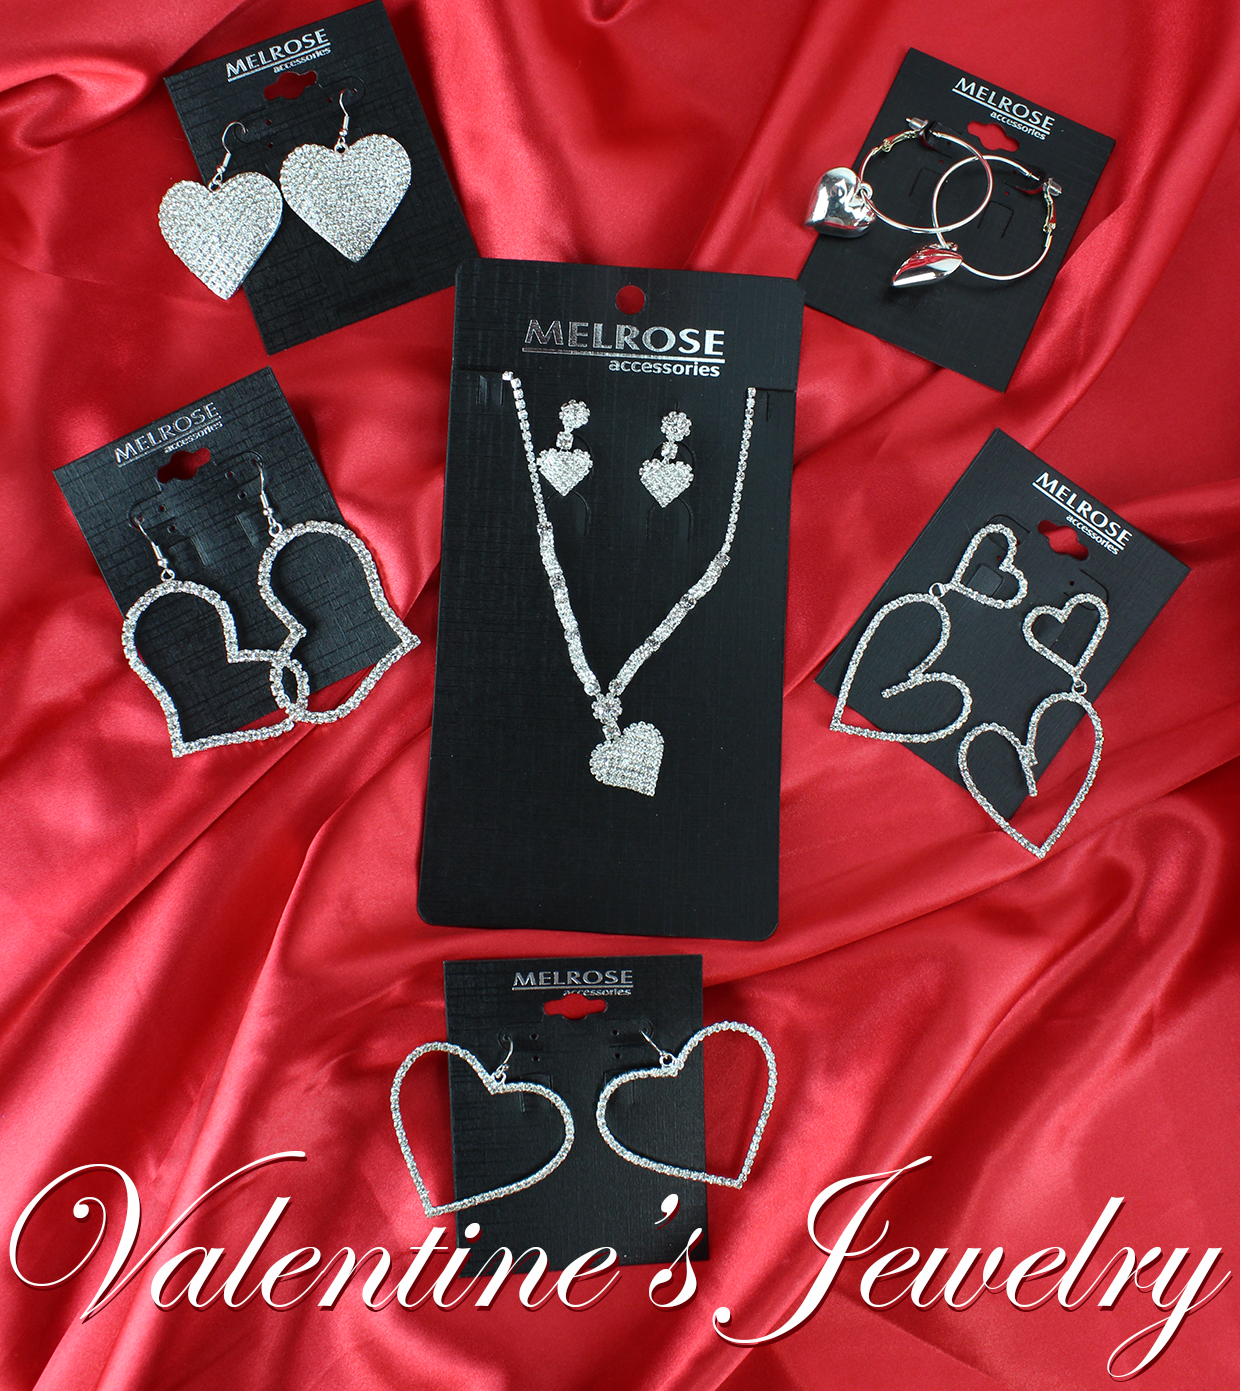 Valentine's Day Jewelry and Jewelry Sets